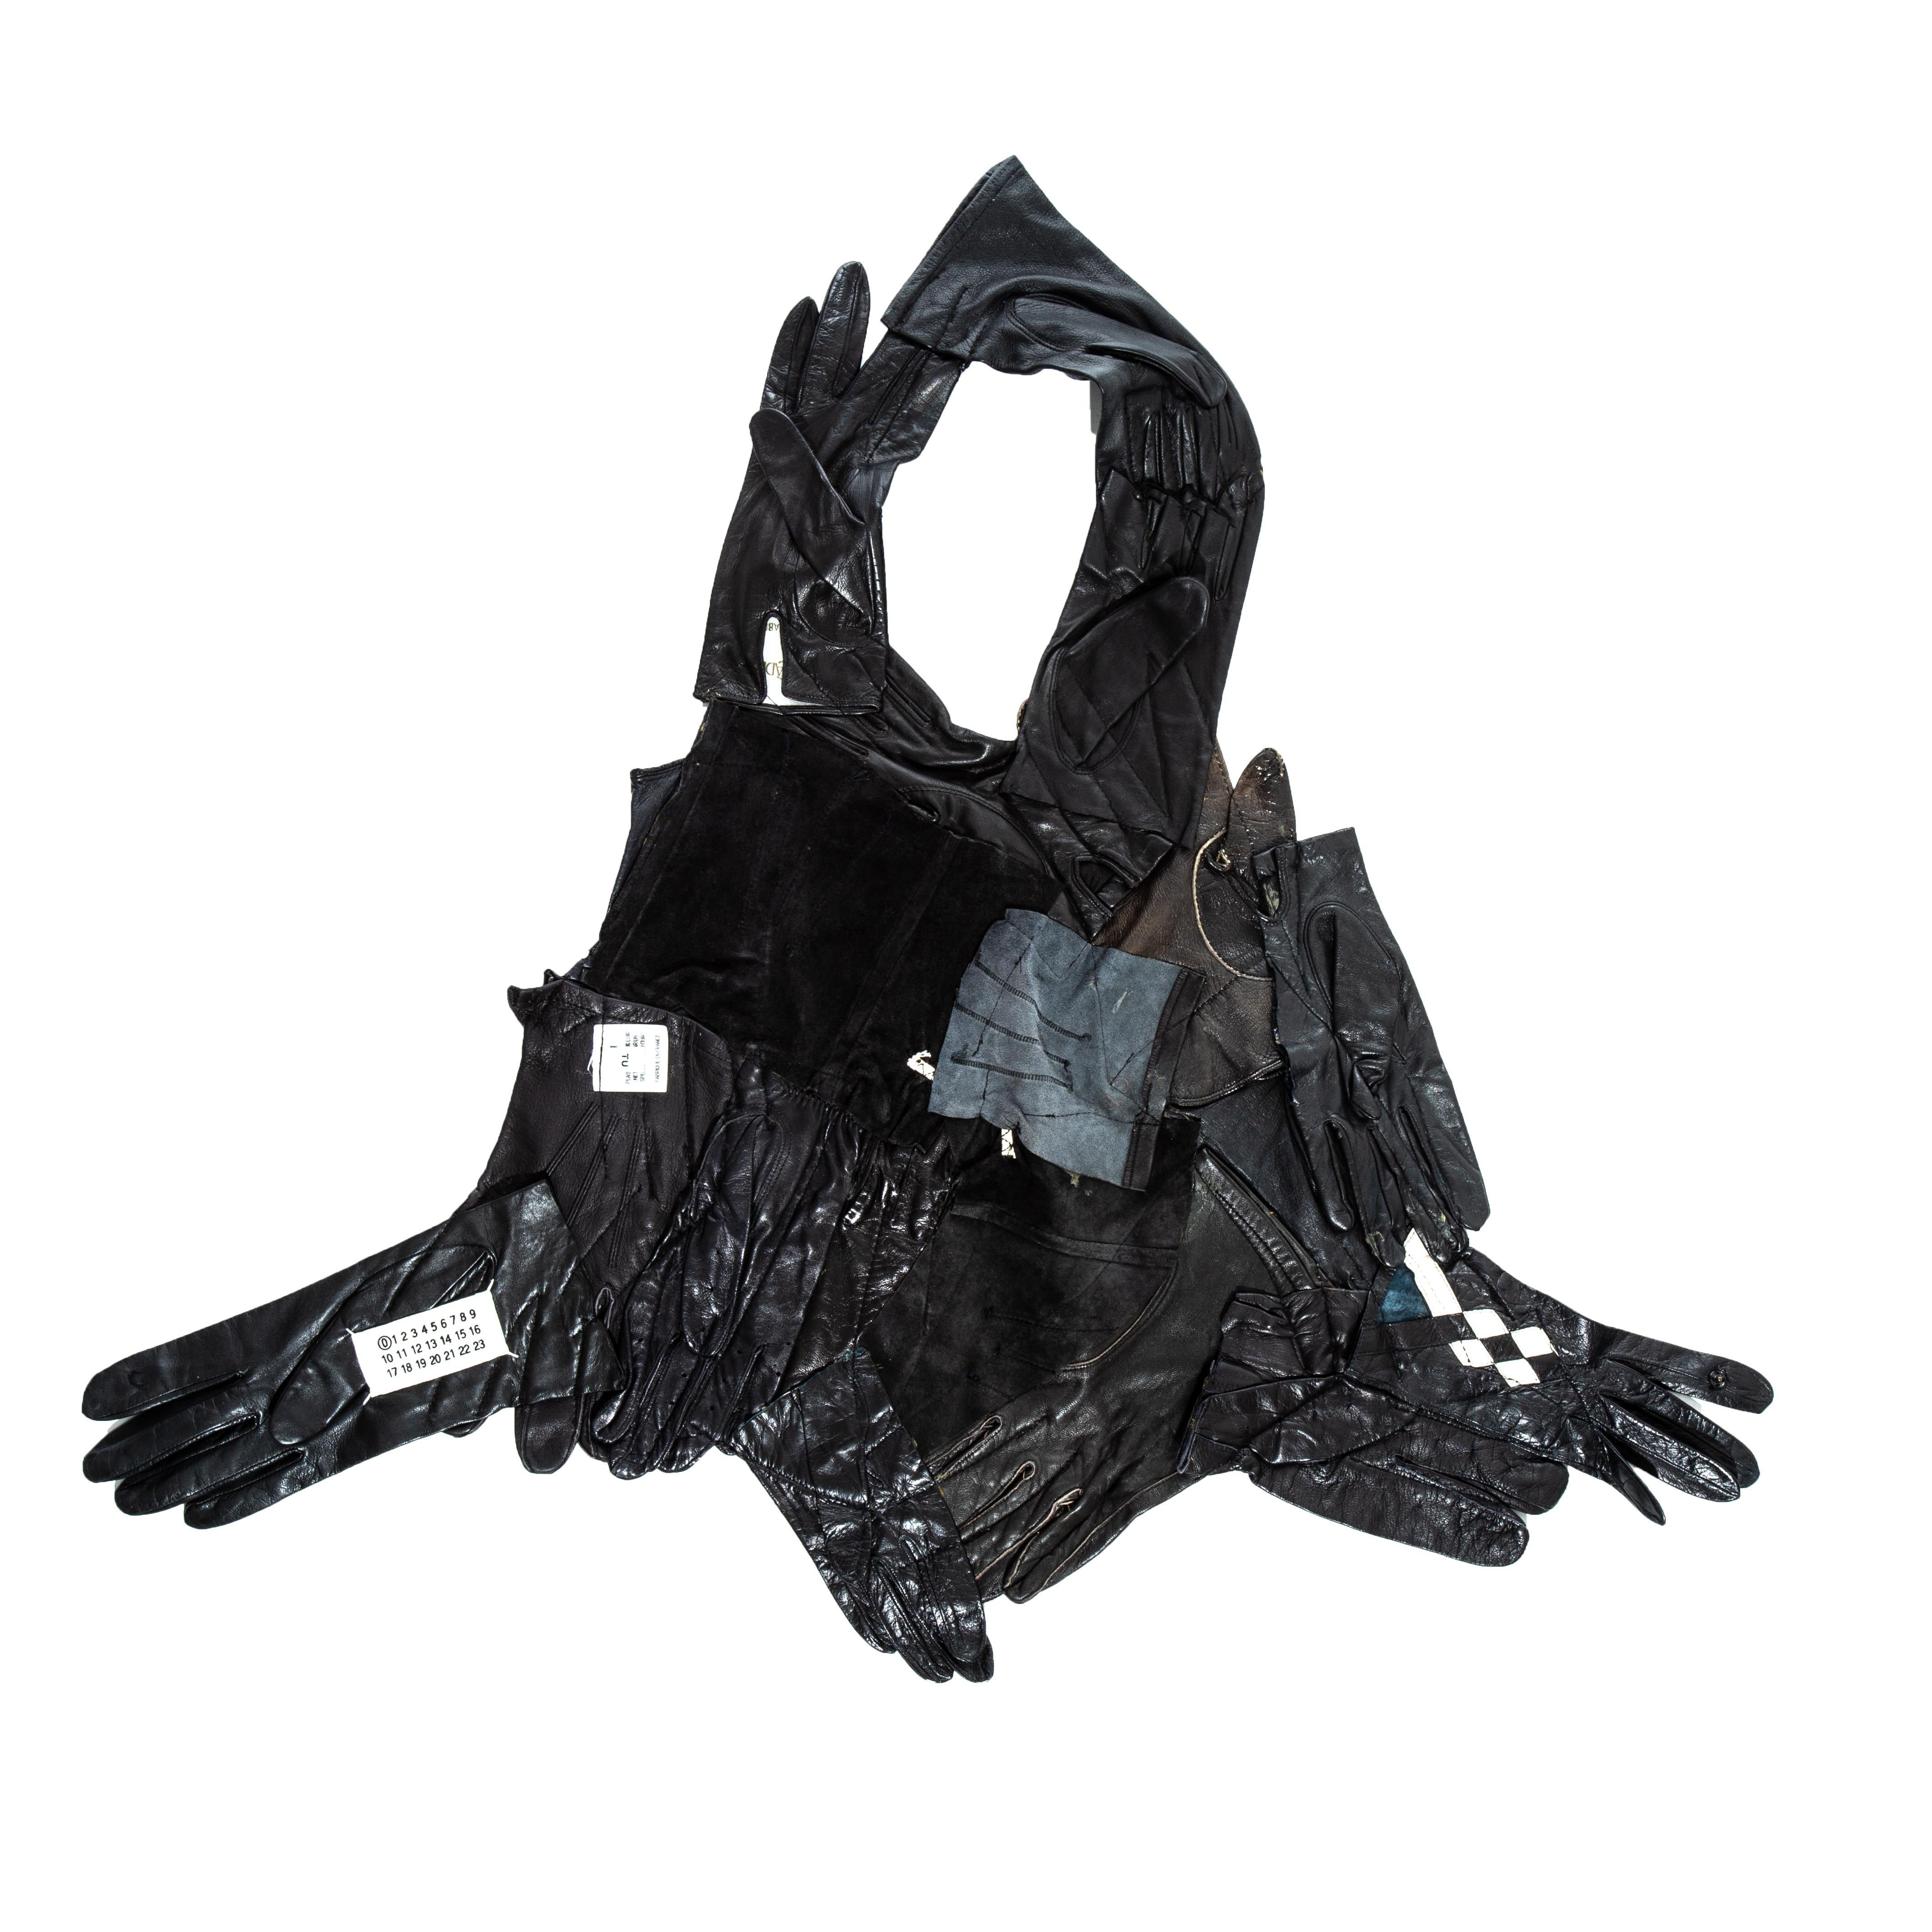 Margiela artisanal black leather glove top, ss 2001 For Sale 1